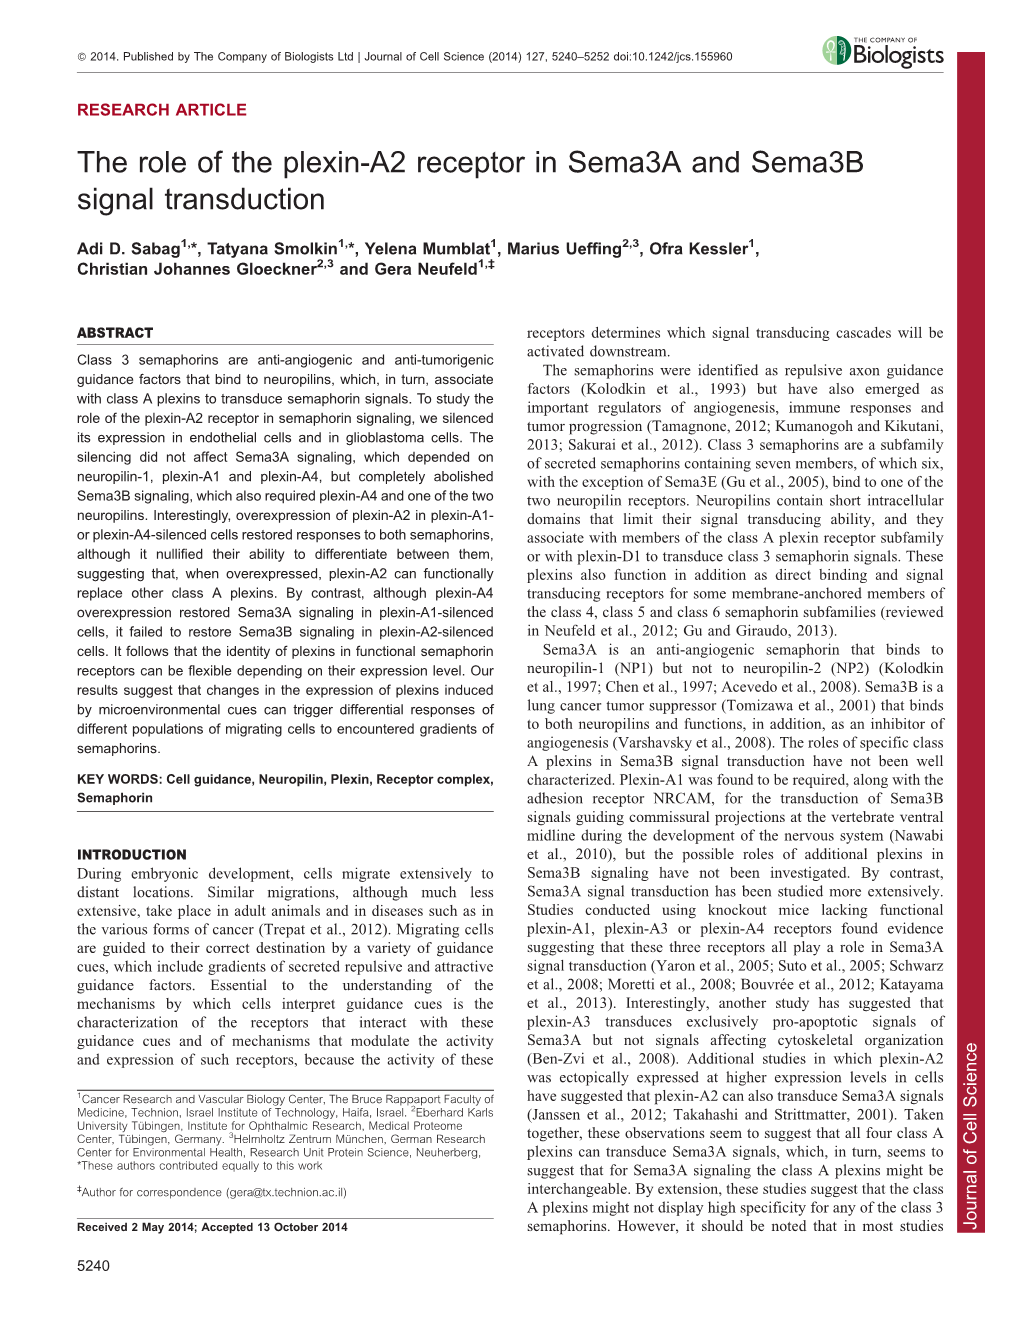 The Role of the Plexin-A2 Receptor in Sema3a and Sema3b Signal